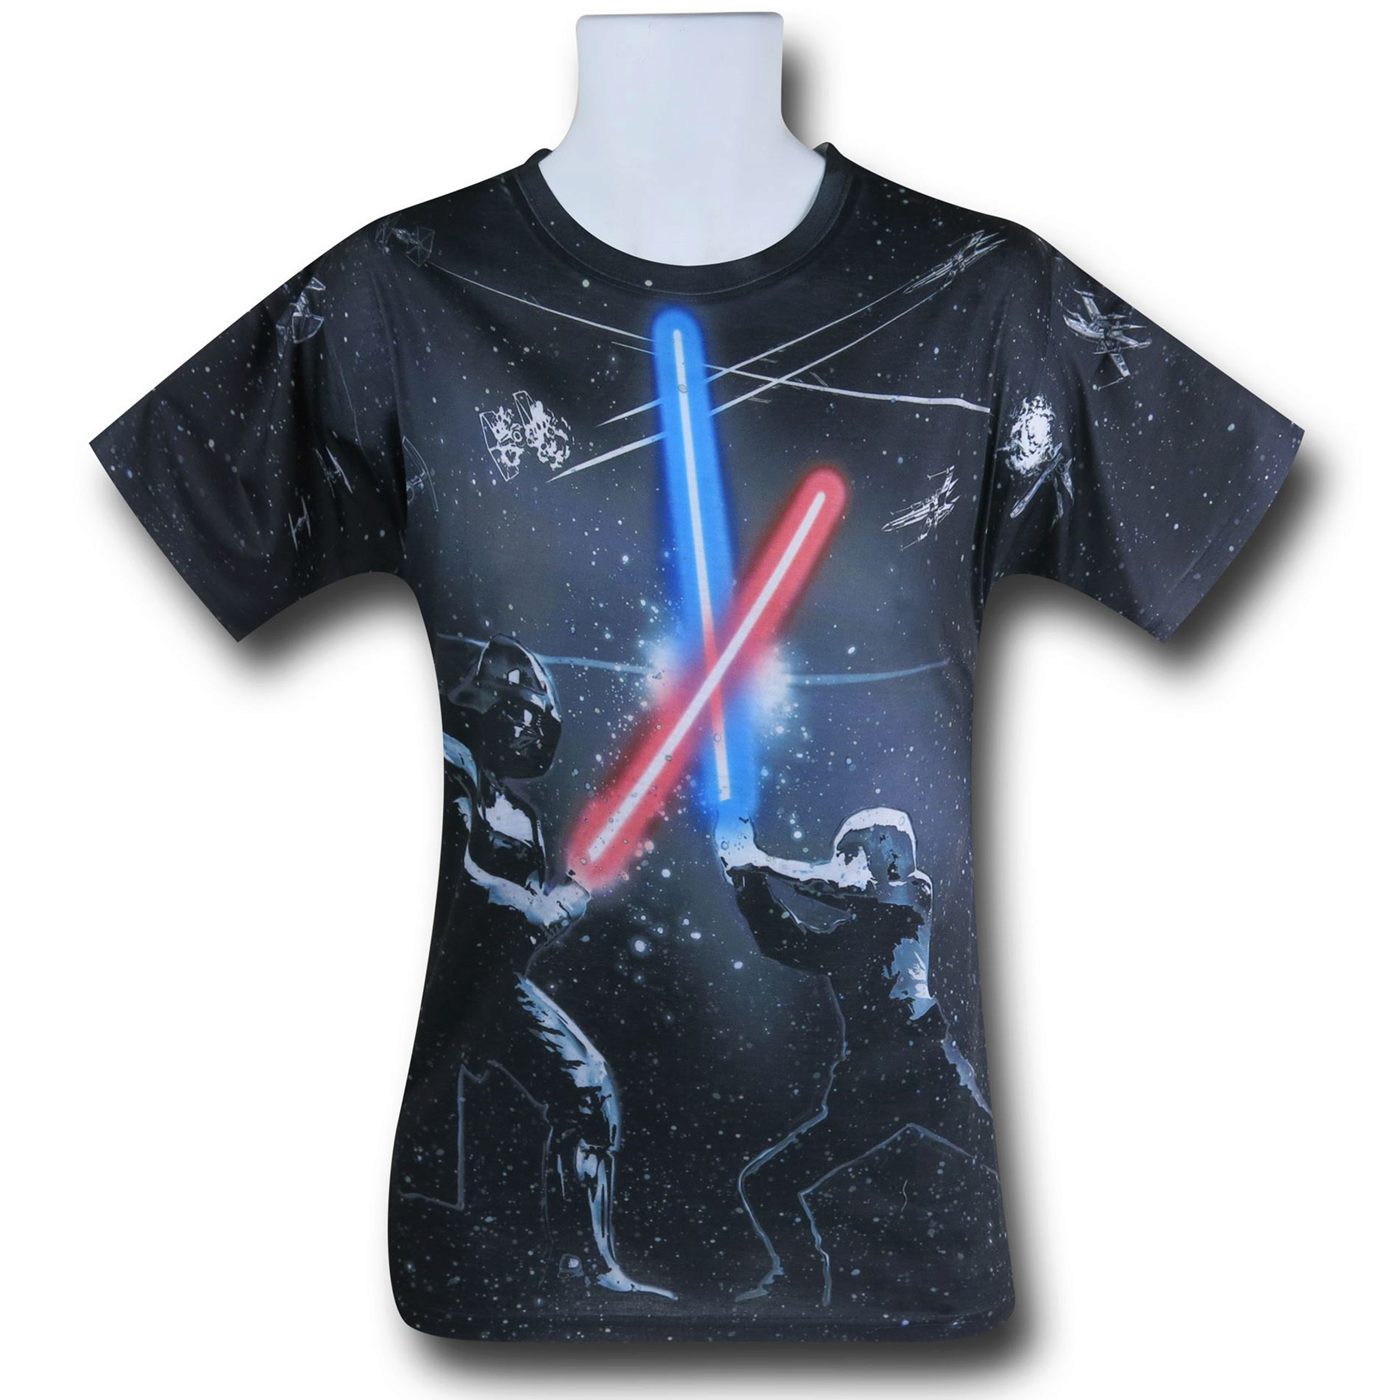 Star Wars Sublimated Saber Fight T-Shirt